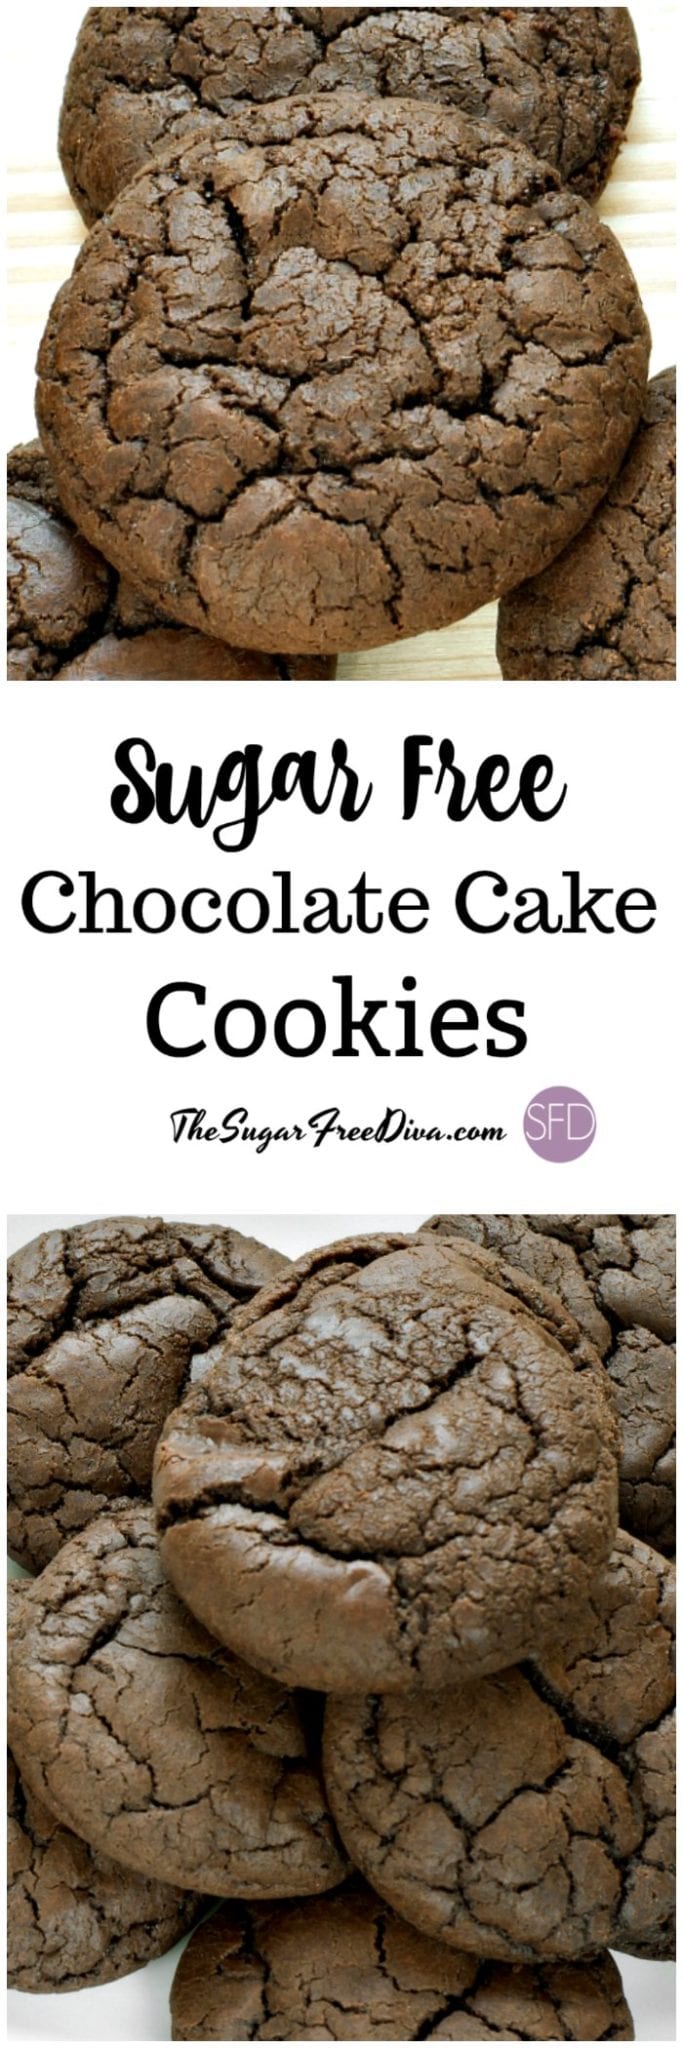 Sugar Free Chocolate Cake Cookies